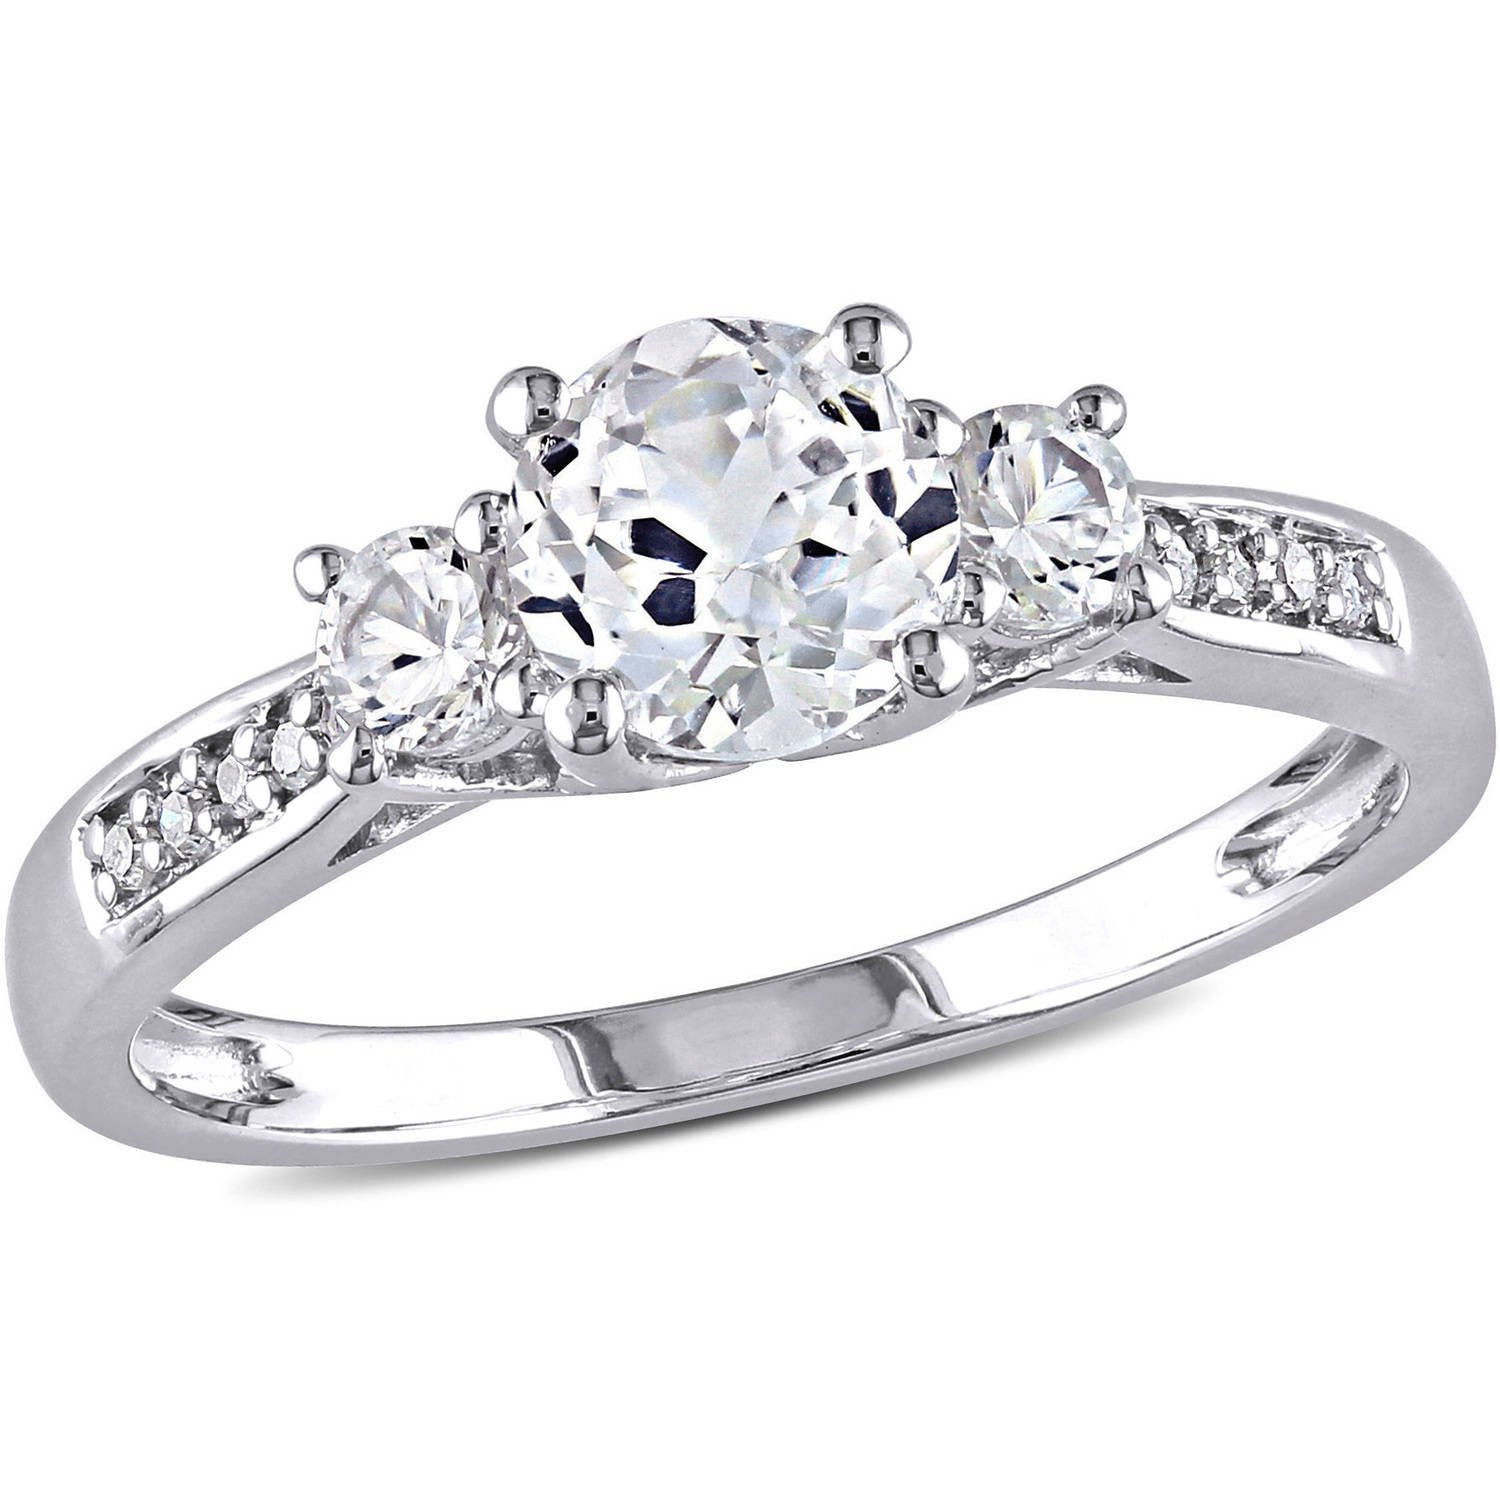 Walmart Diamond Wedding Rings
 Miabella 1 10 Carat T W Princess Cut Diamond Sterling